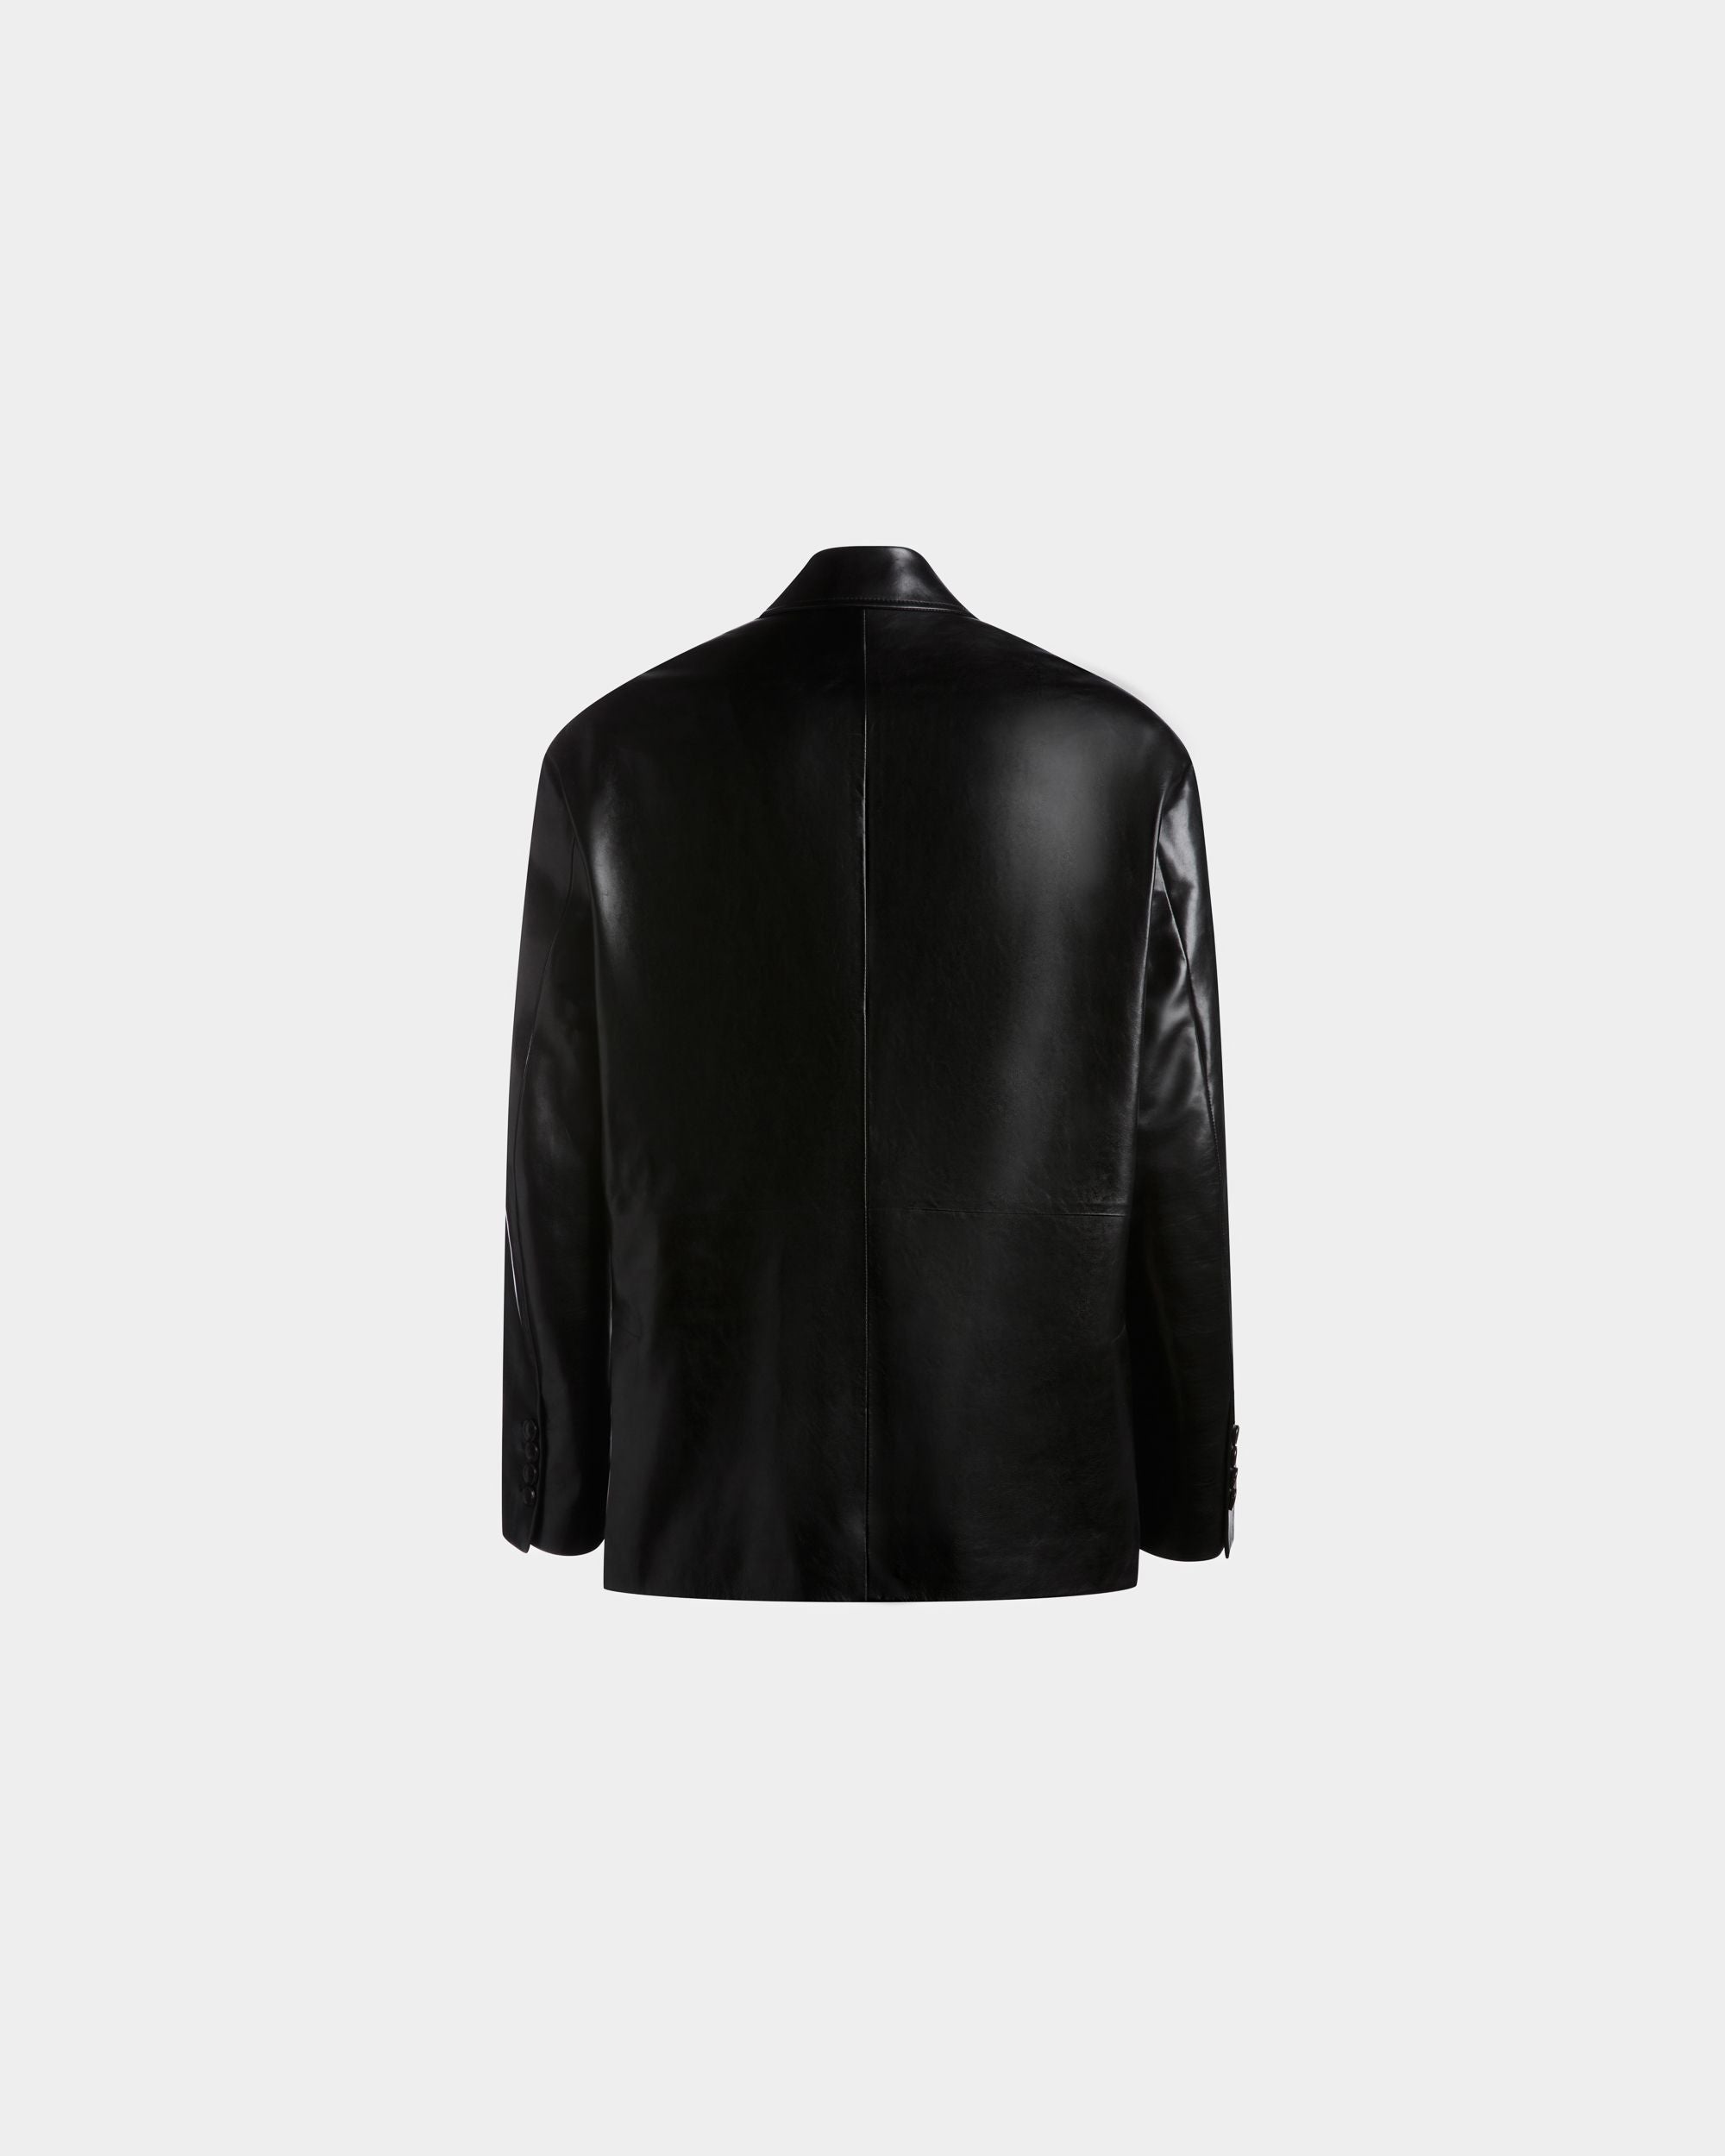 Men's Jacket in Black Leather | Bally | Still Life Back